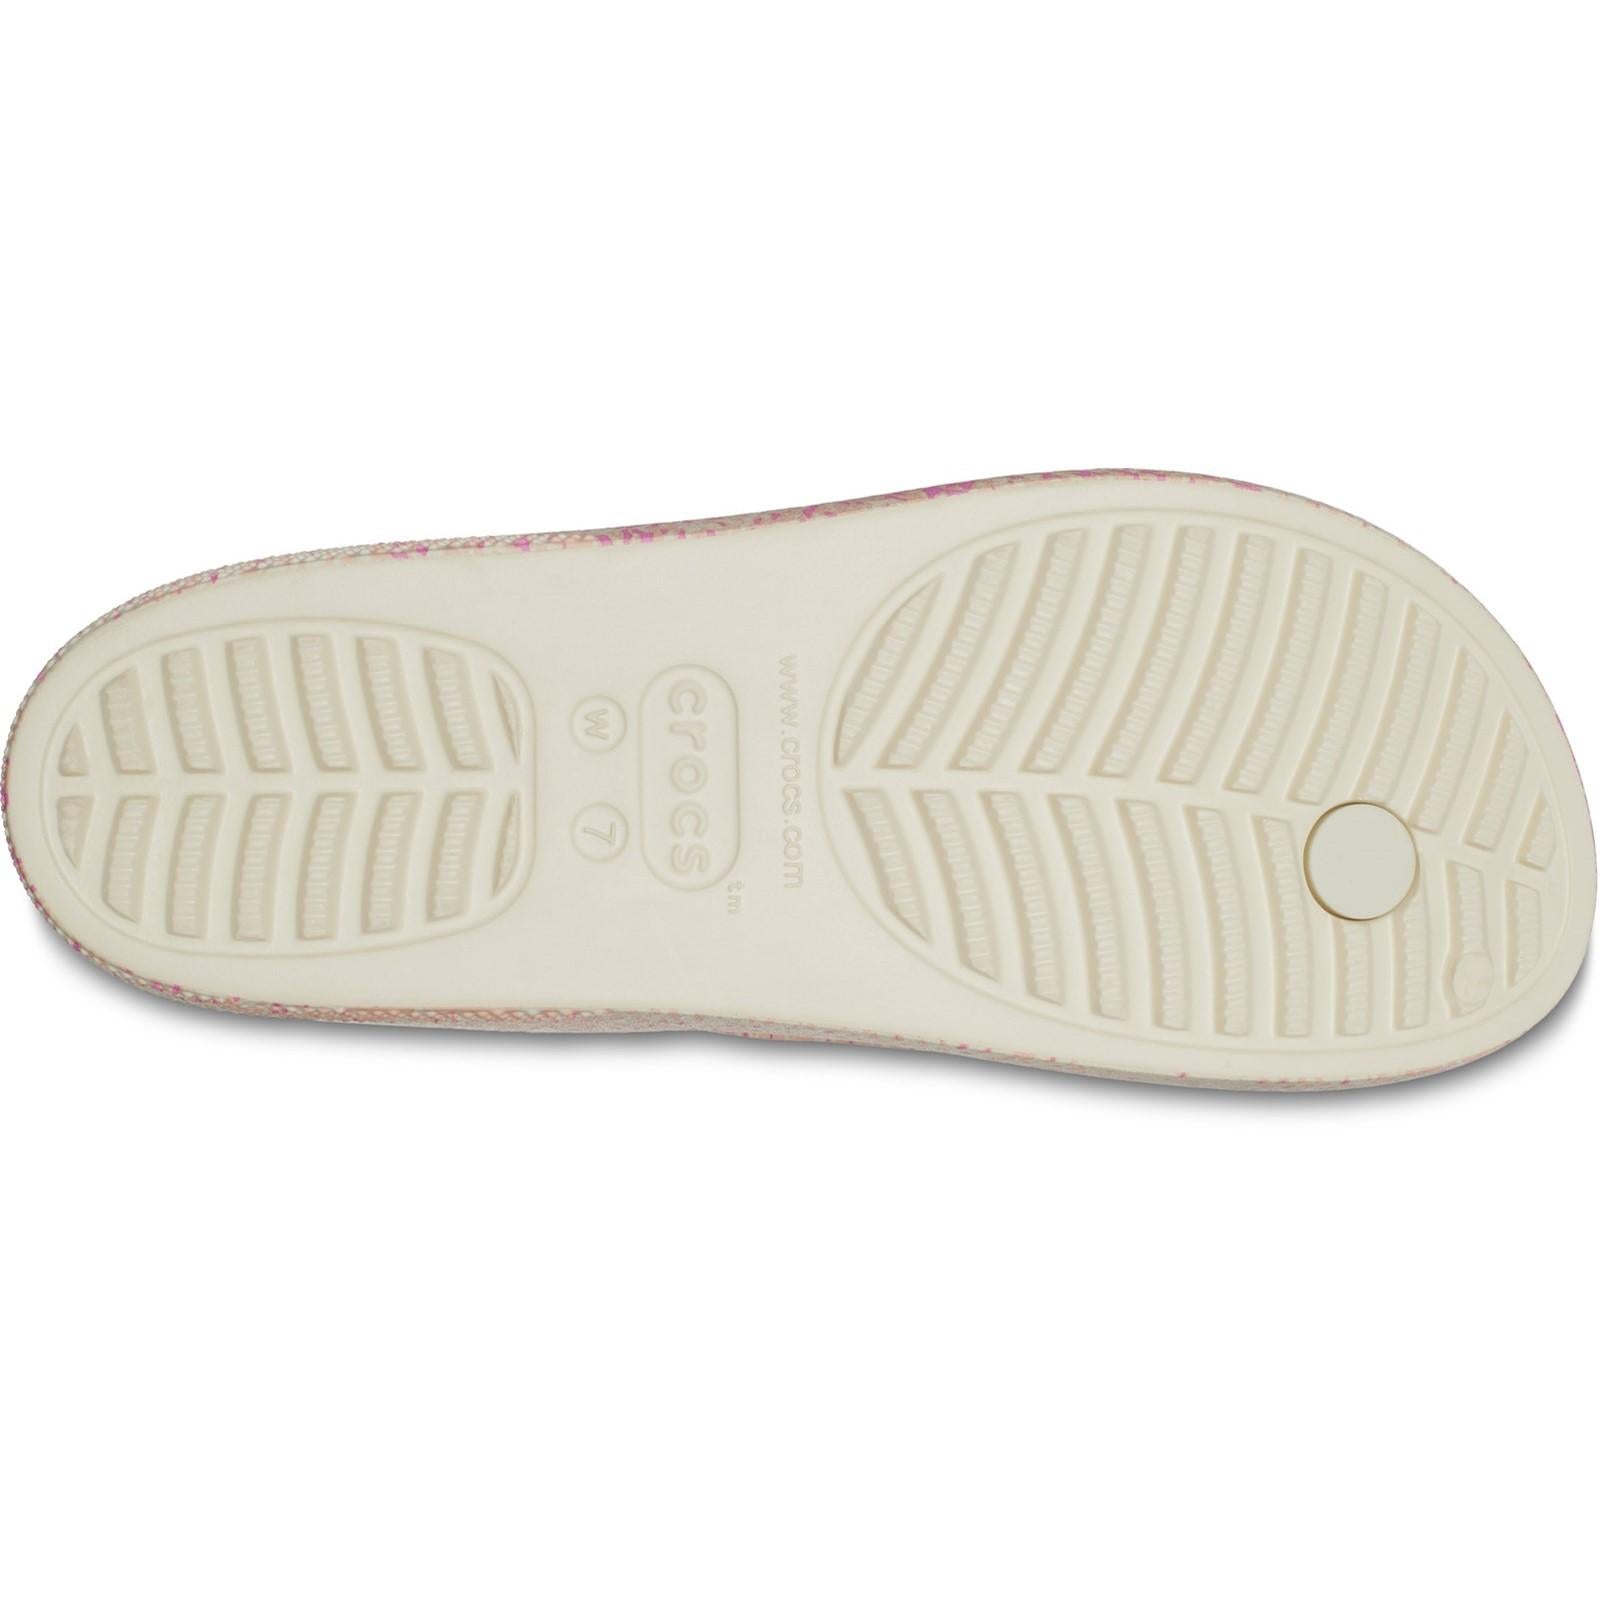 Crocs Classic Platform Snake Print Sandals